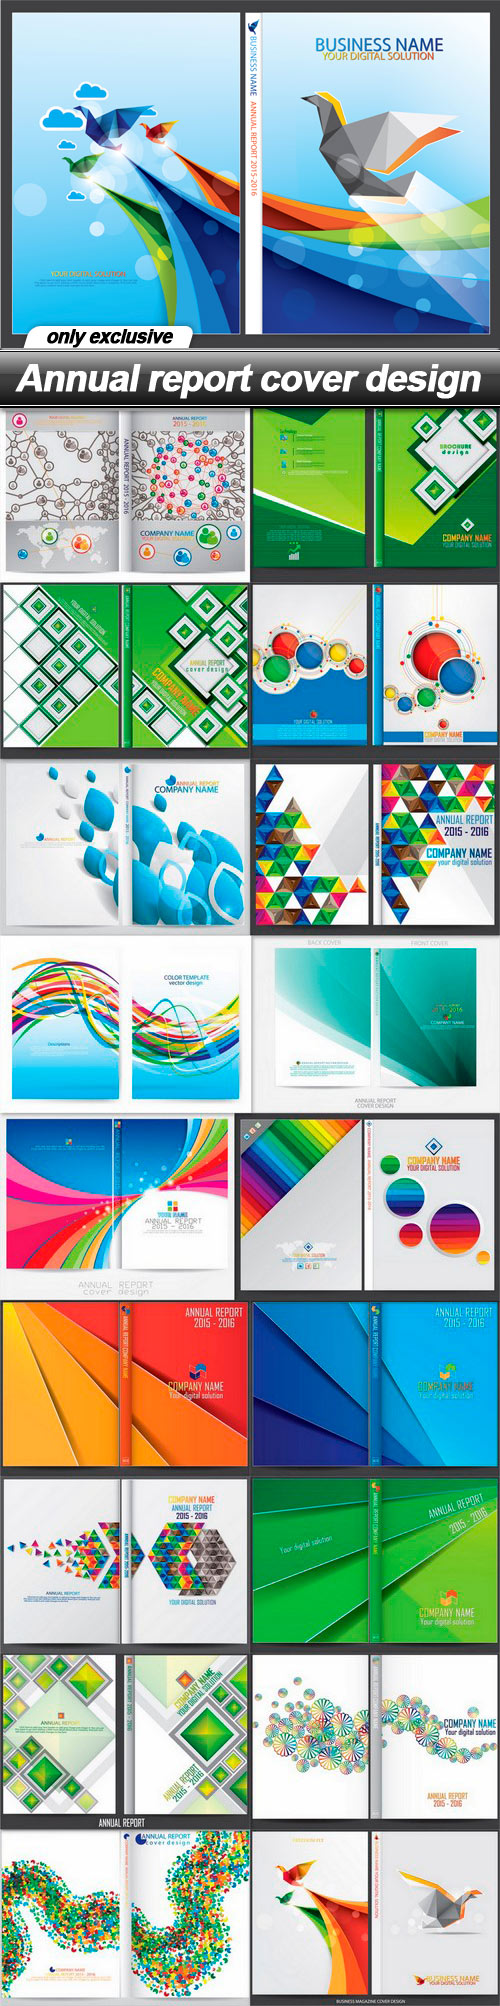 Annual report cover design - 19 EPS